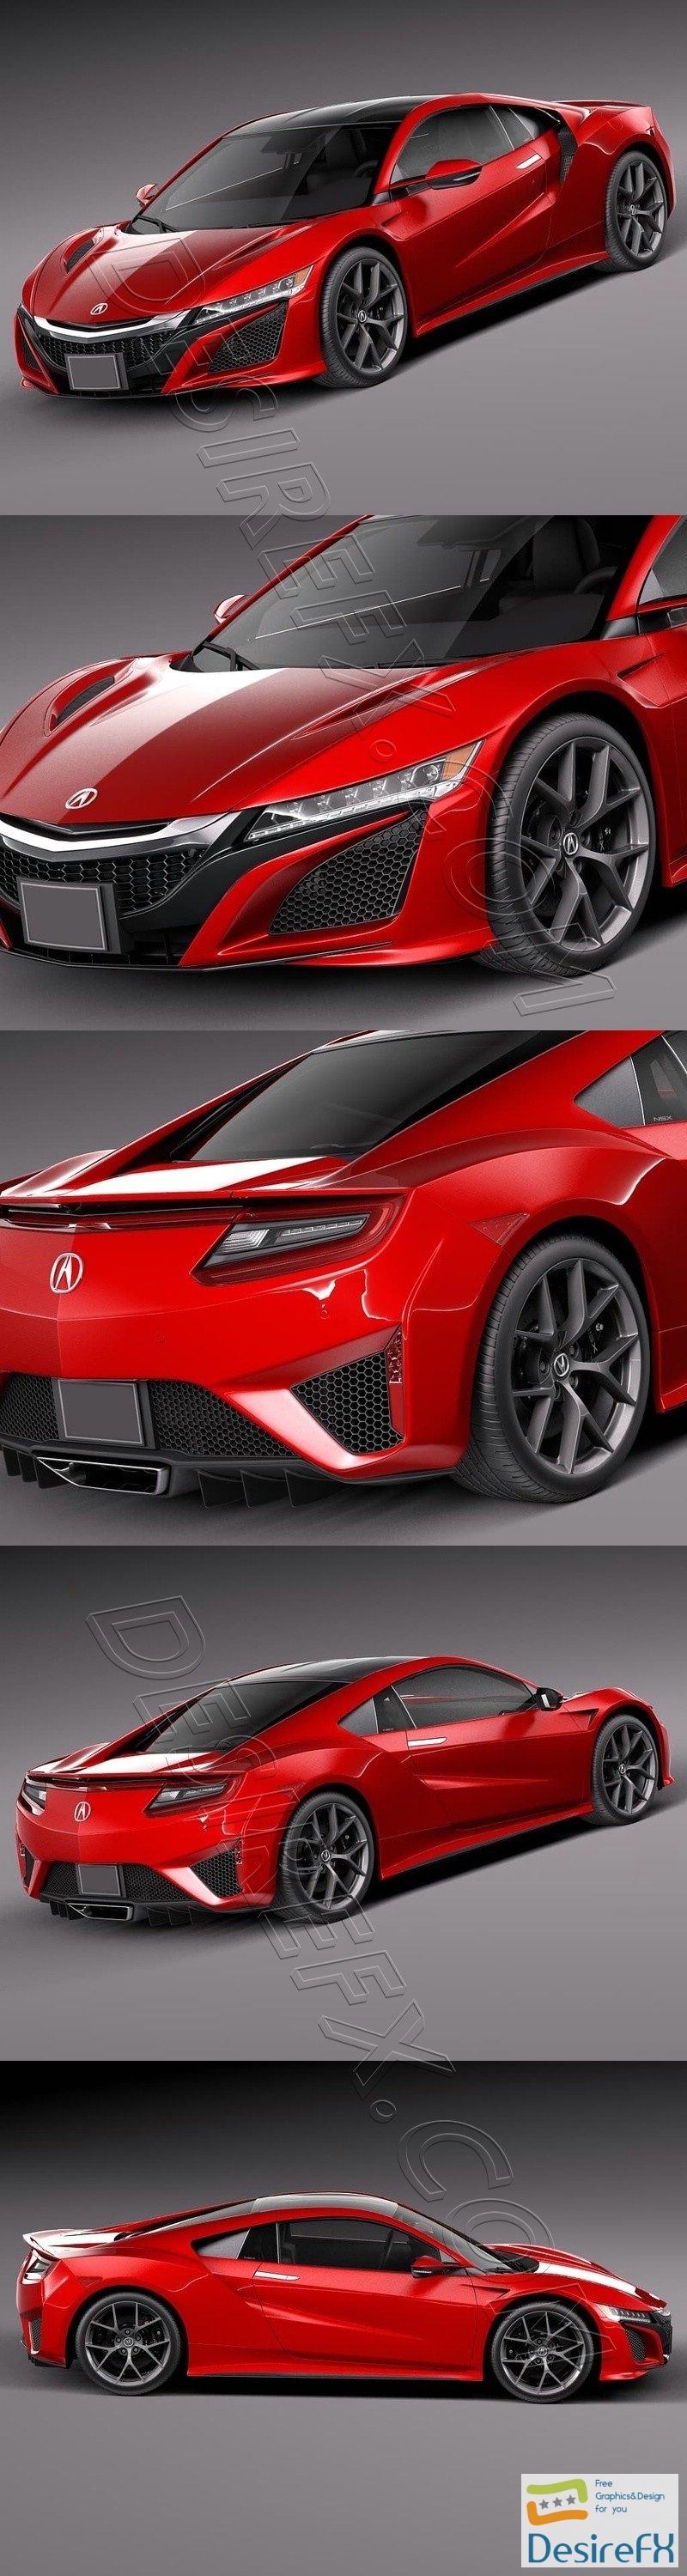 Acura NSX 2016 3D Model